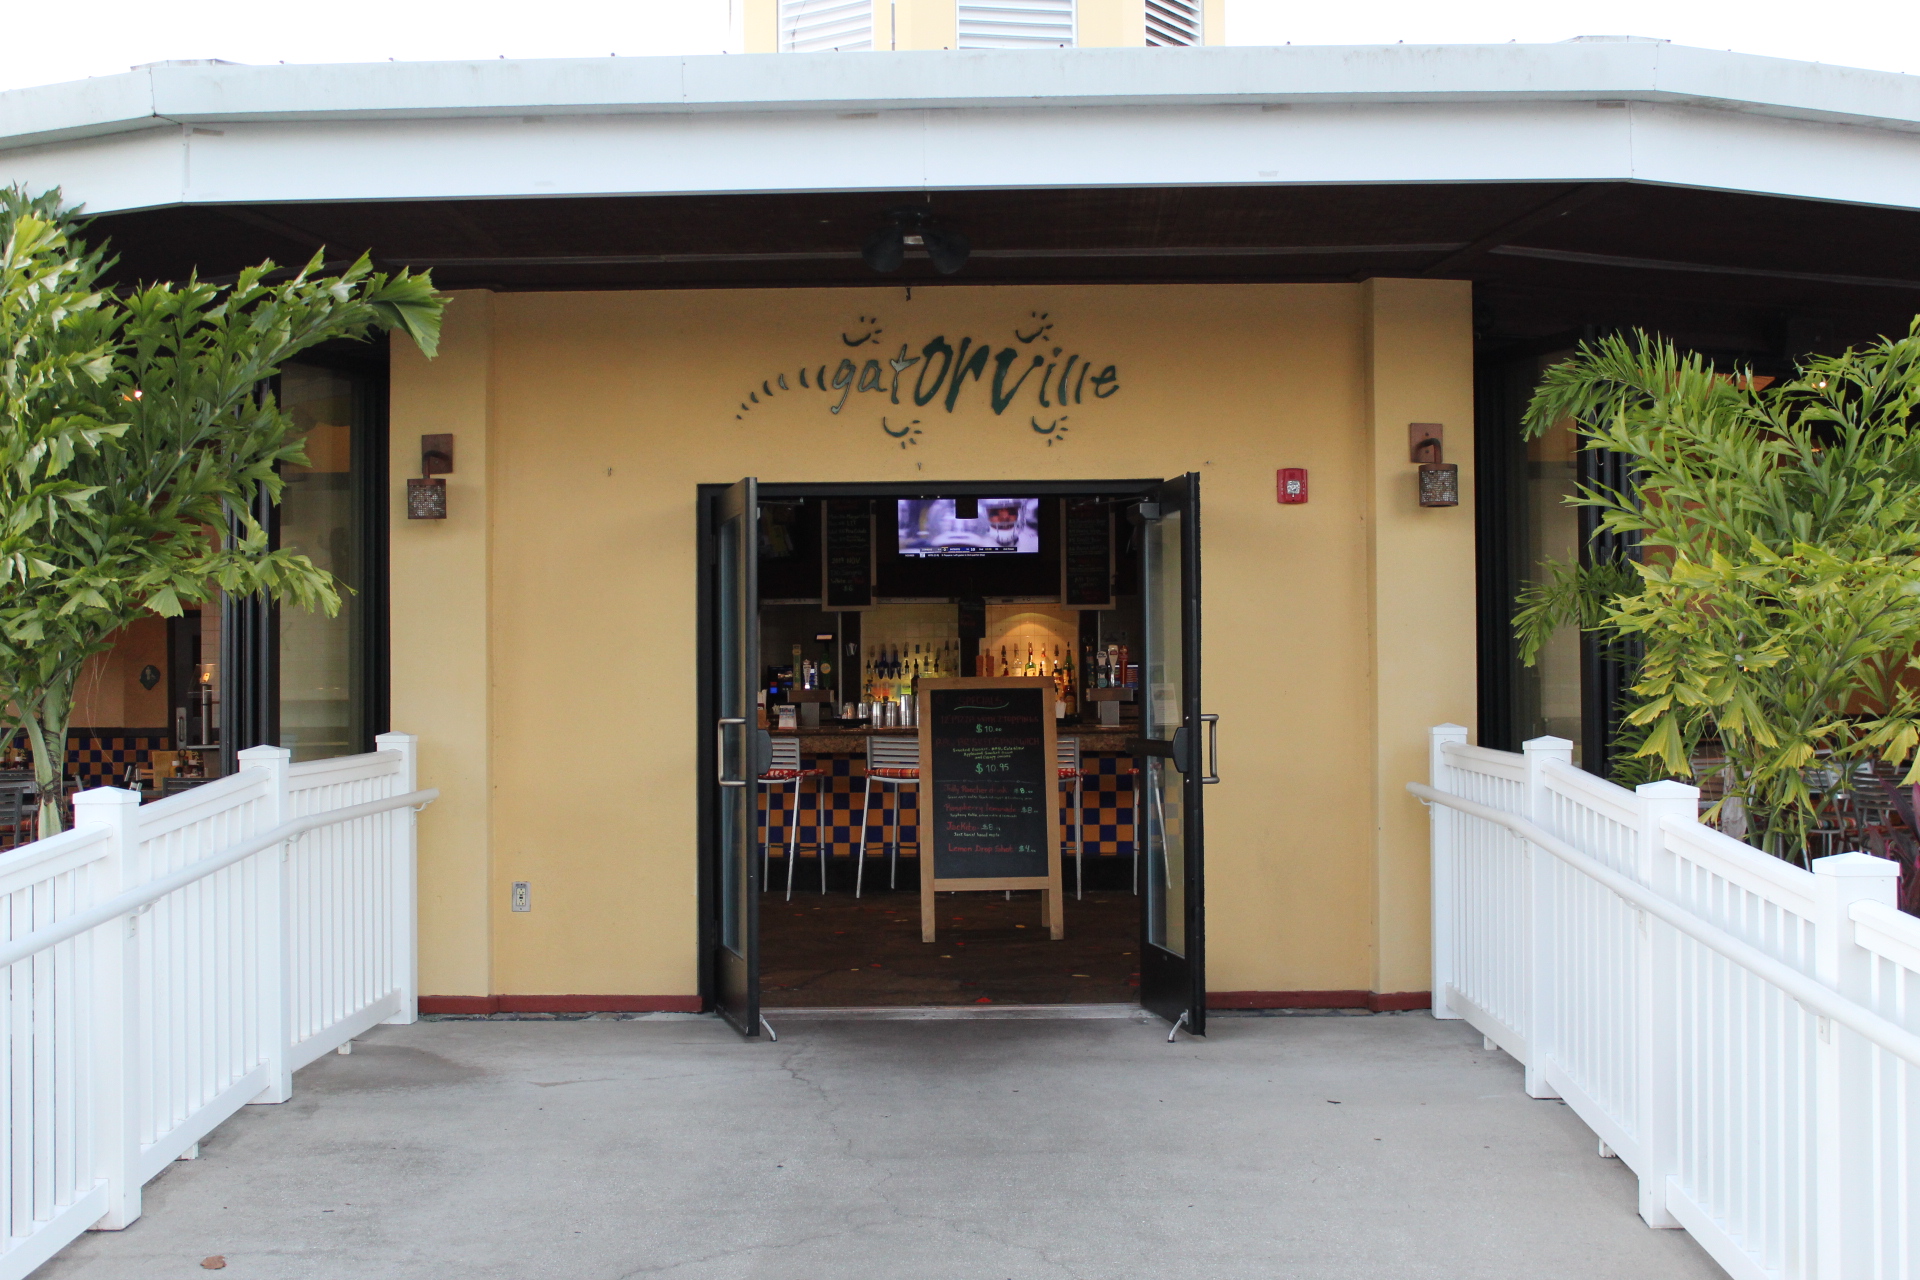 Gatorville Restaurant at Wyndham Orlando Resort International Drive